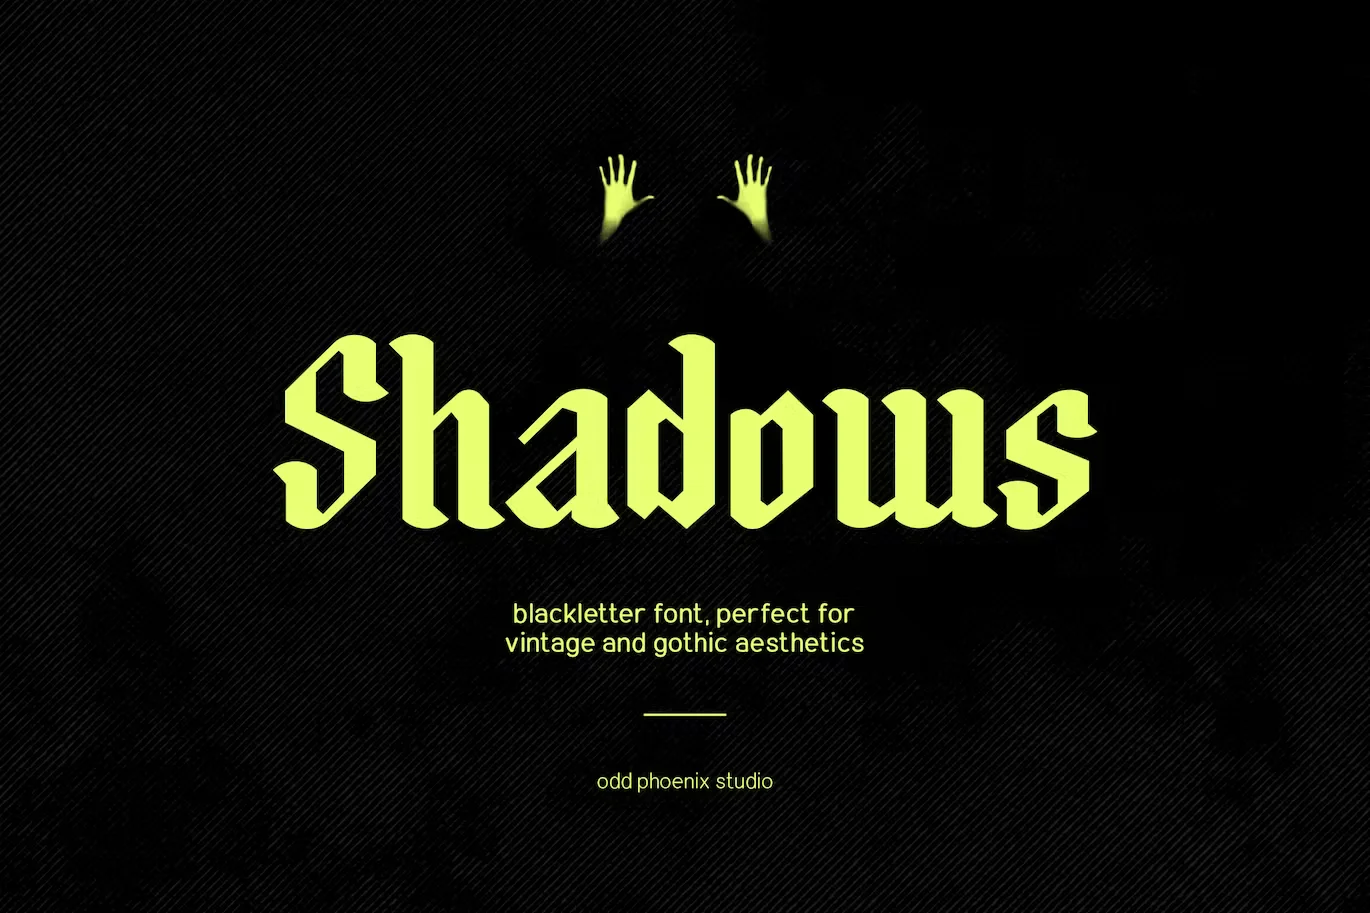 Shadows - Vintage Gothic Blackletter Typeface